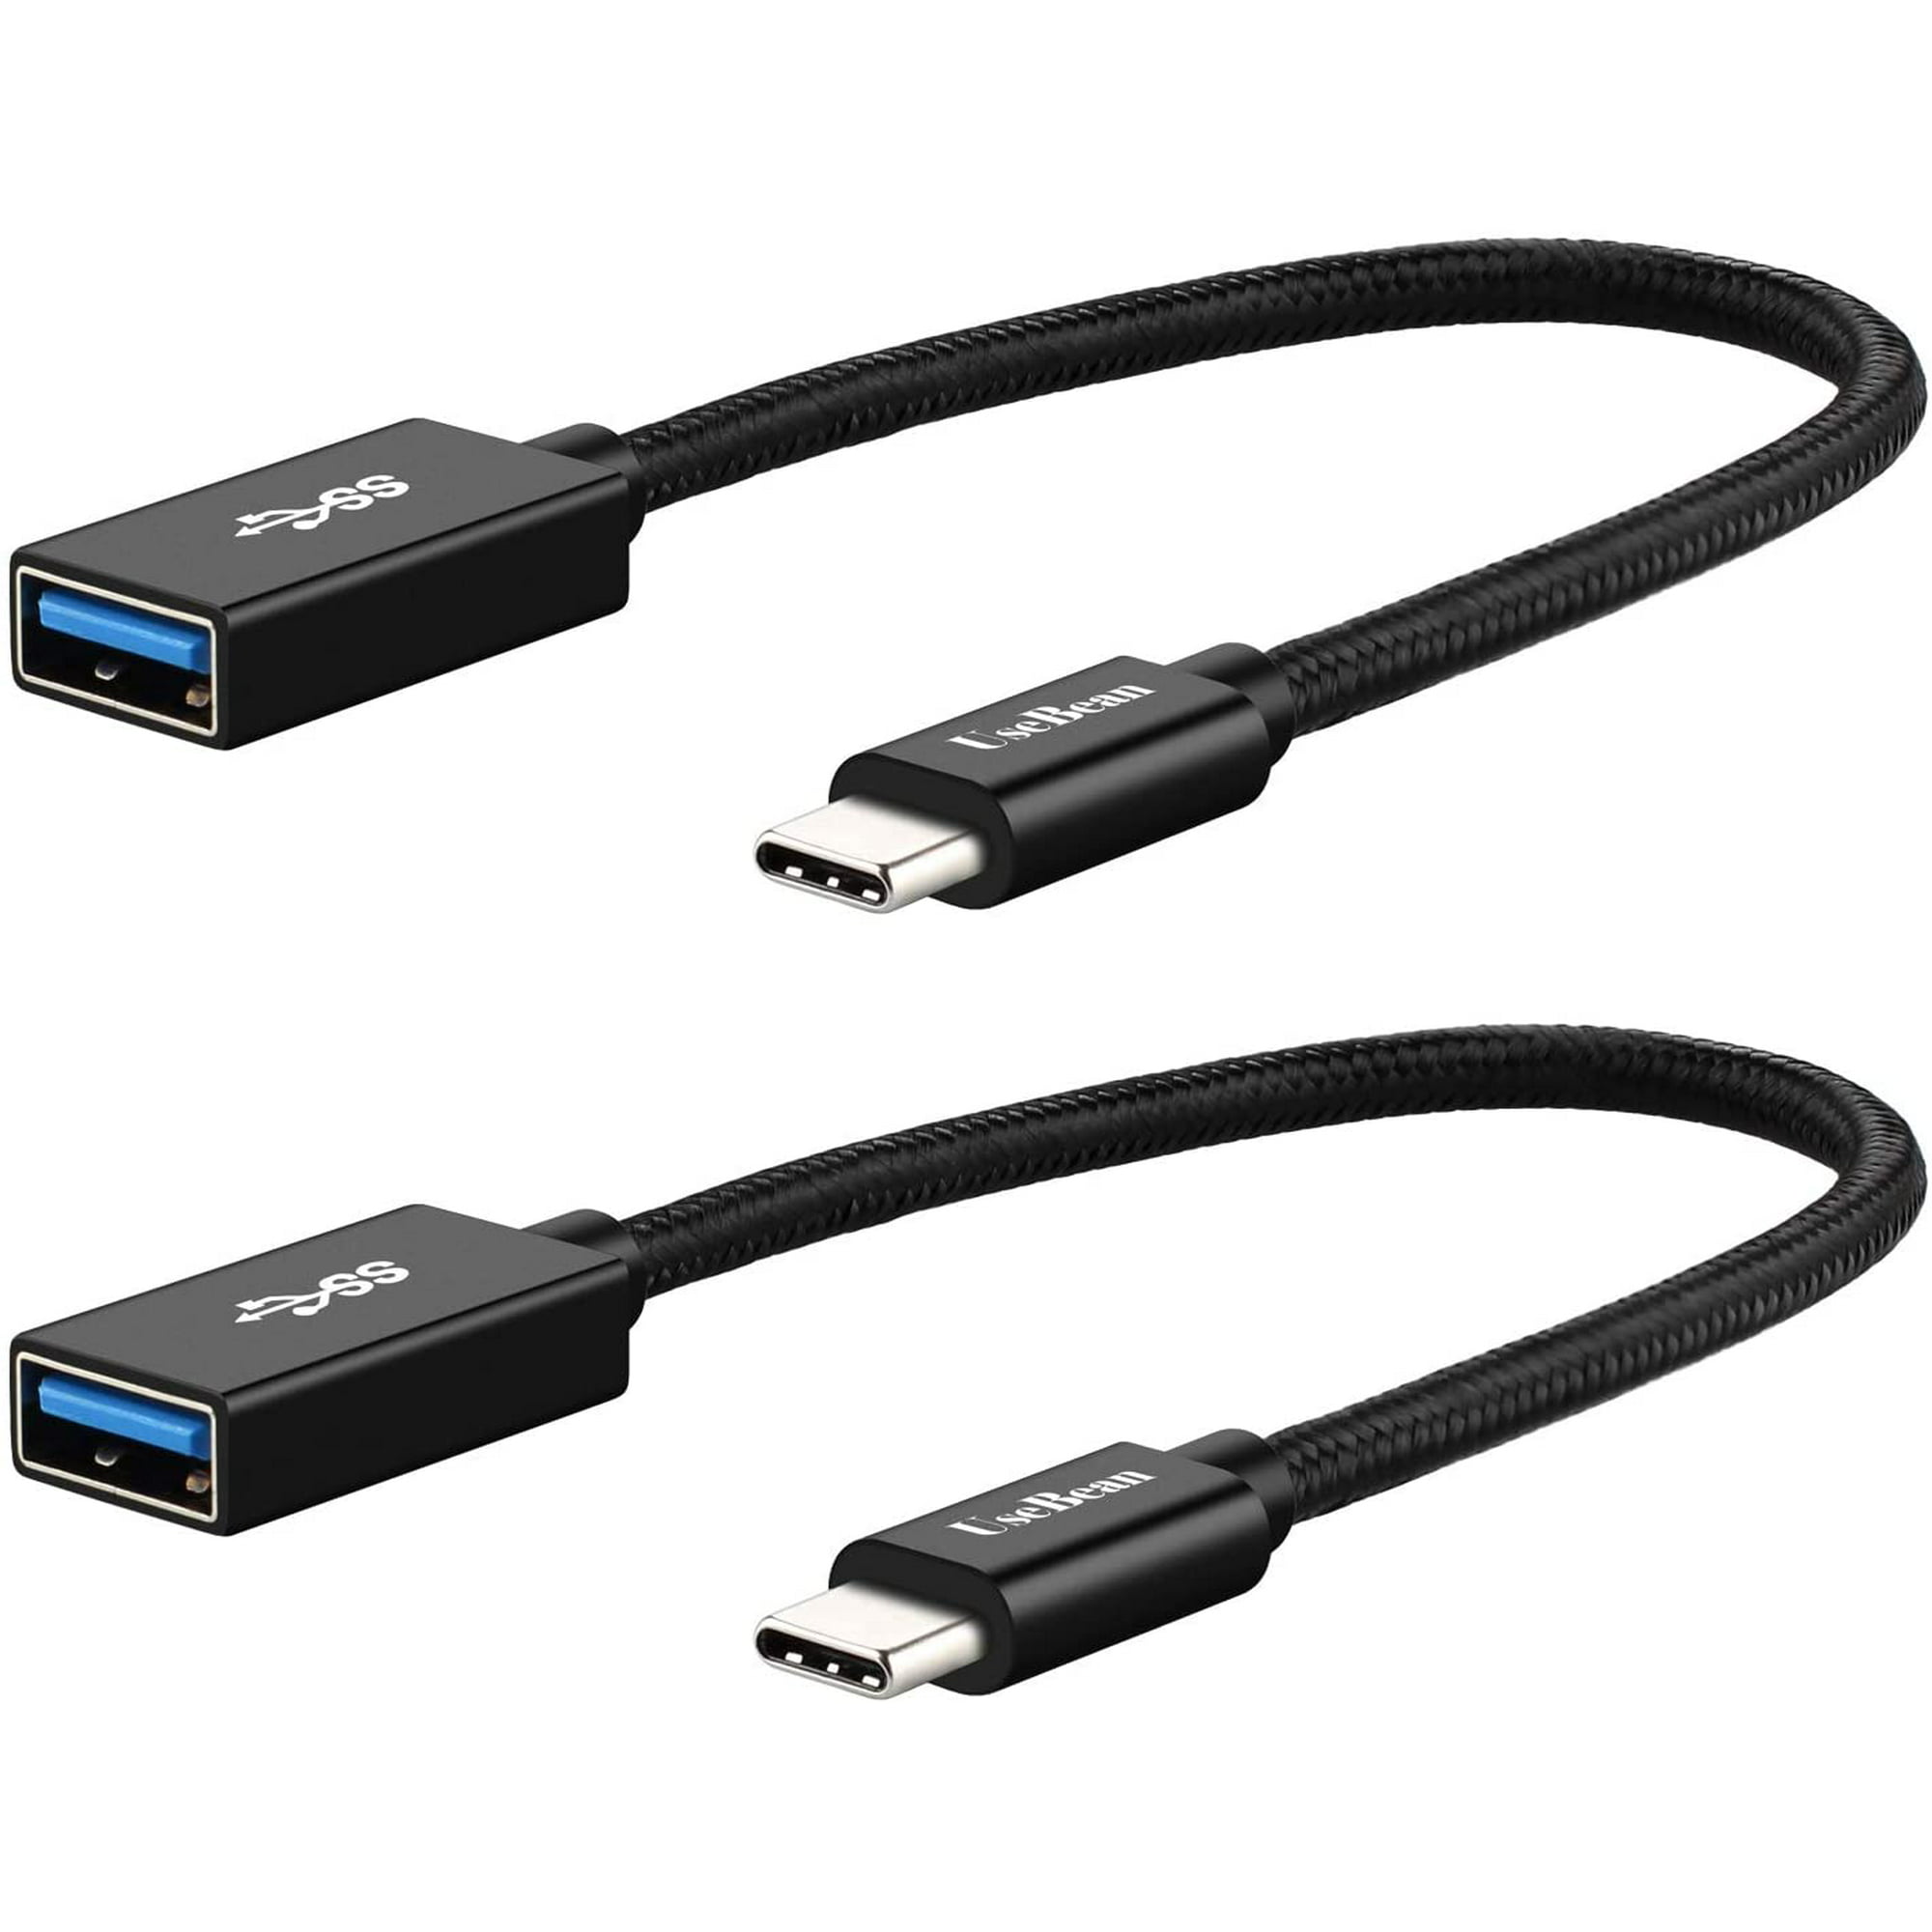 OTG USB C USB 3.0. Thunderbolt 3 USB-C. Thunderbolt 1 to USB 3.0 переходник. Thunderbolt 2 to USB 3.0 переходник.